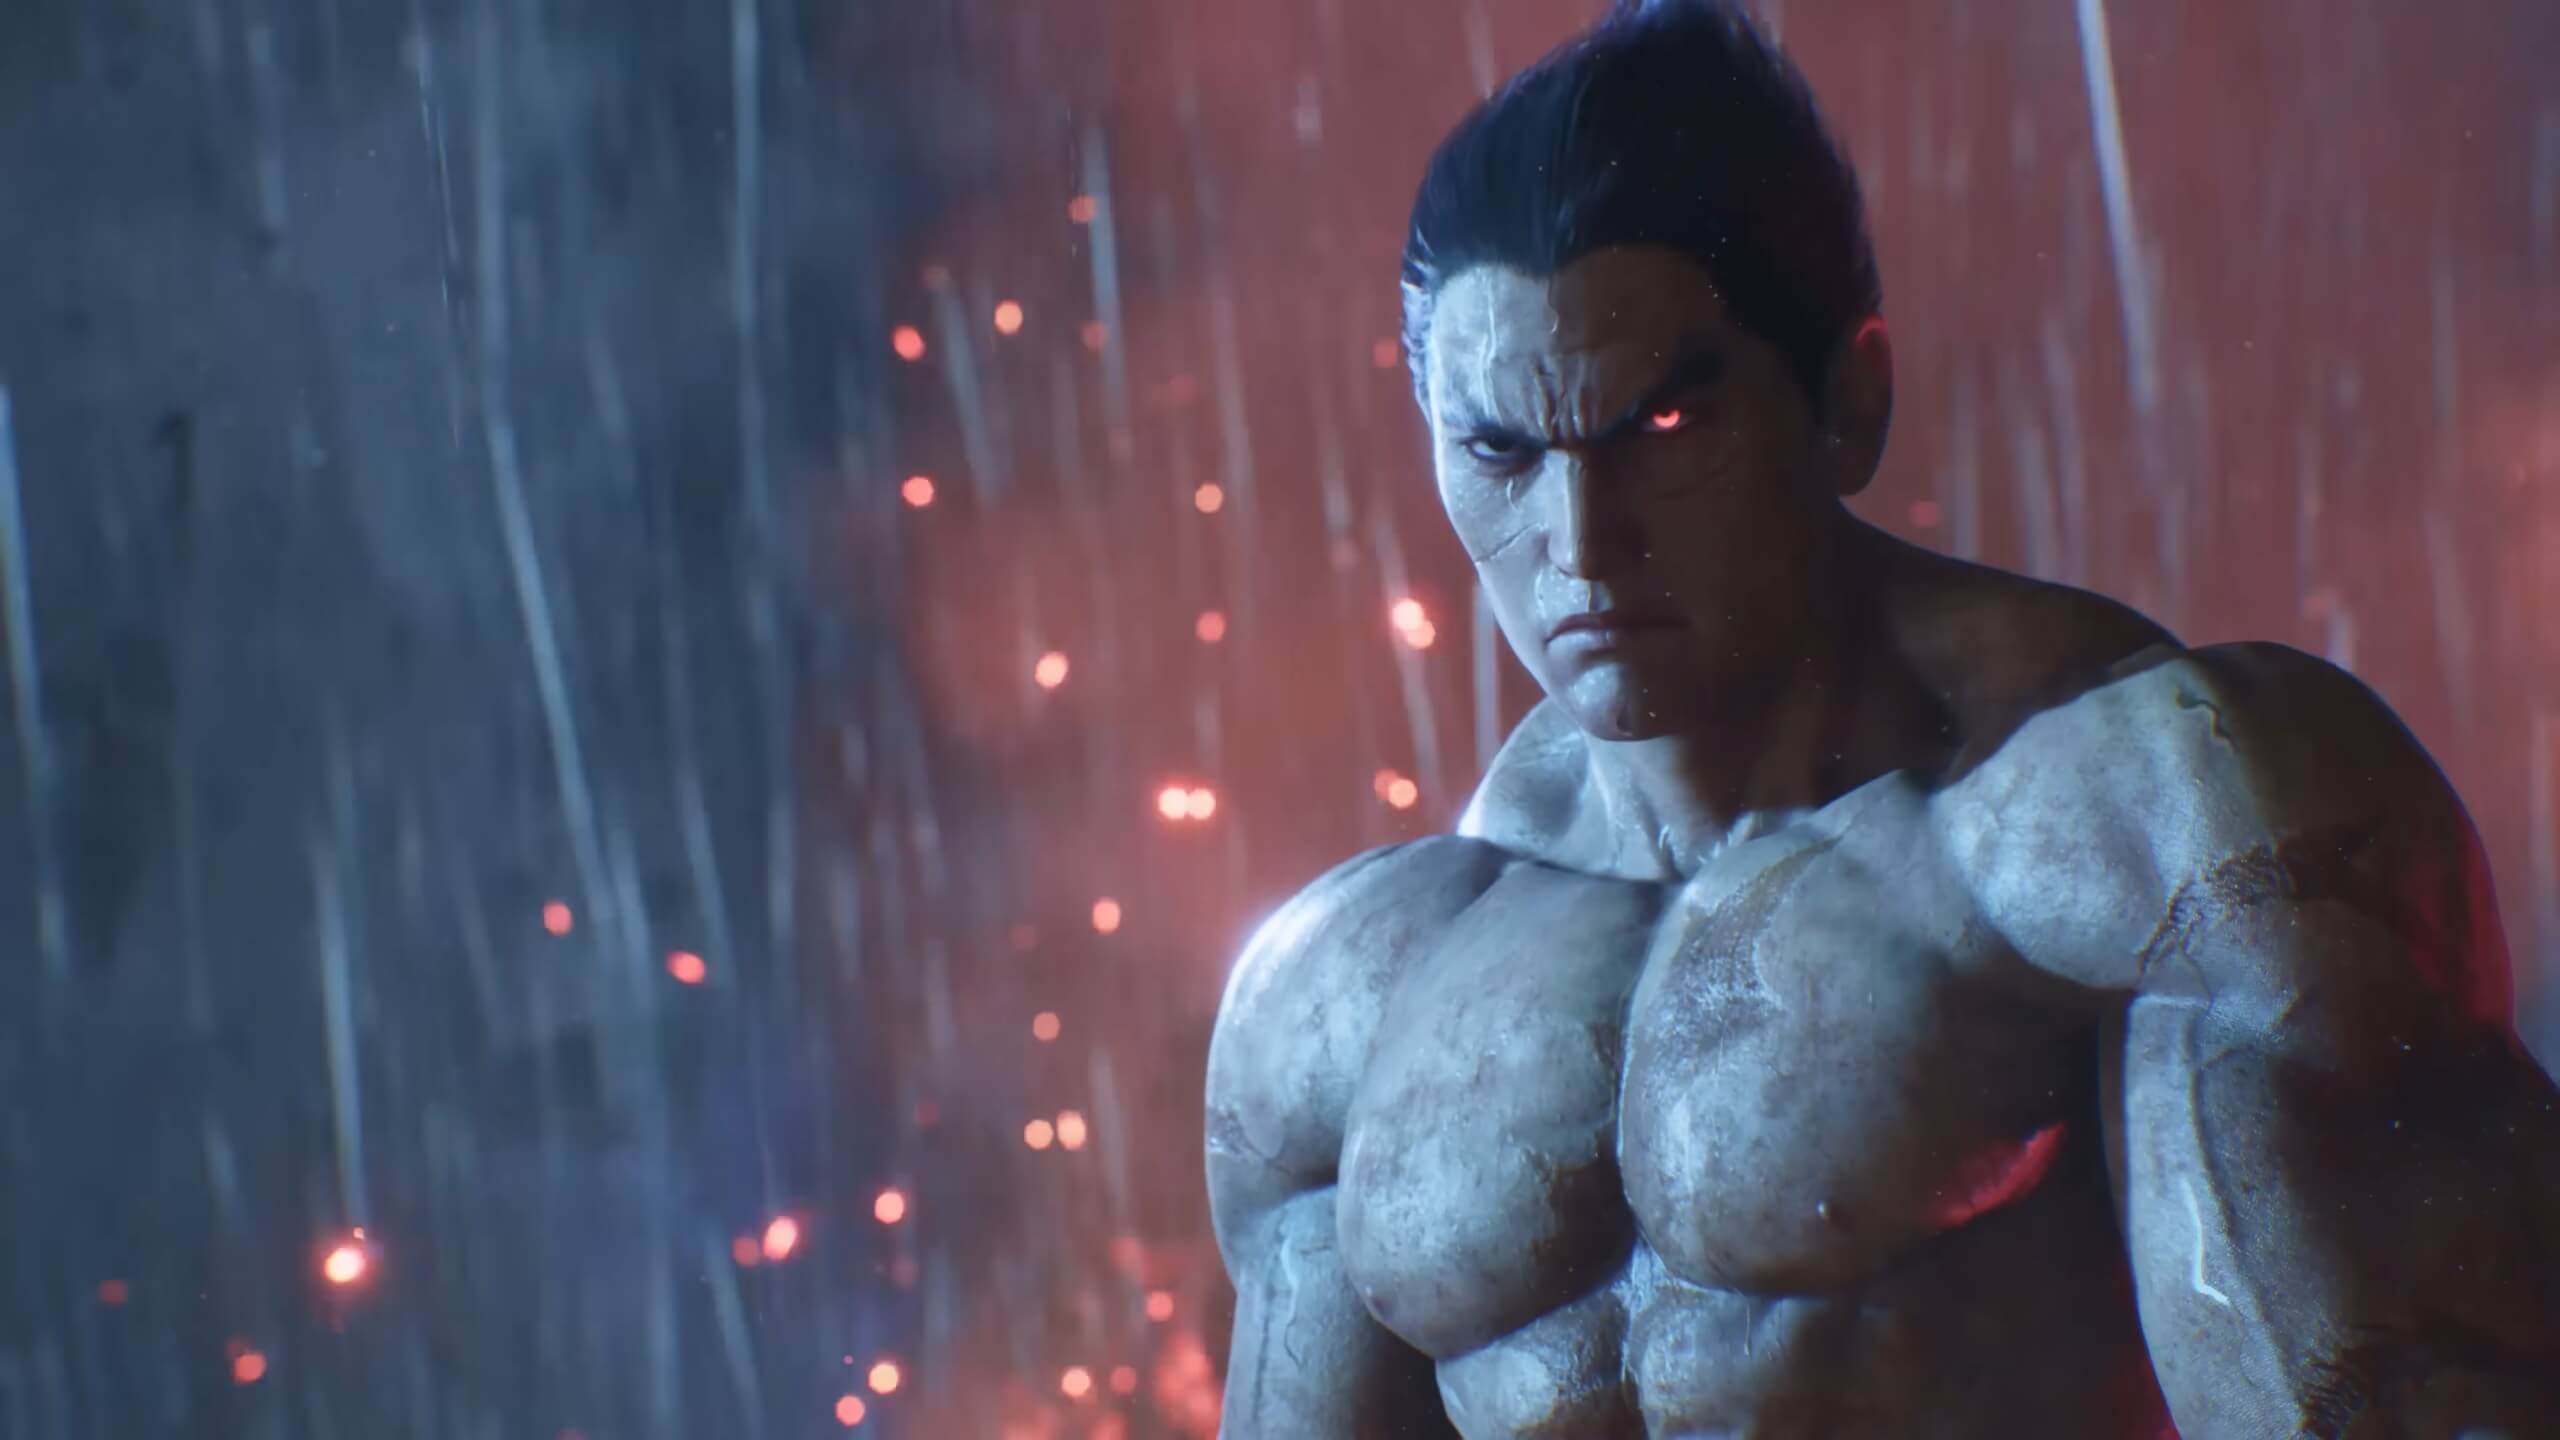 Tekken 8 Kazuya Gameplay Trailer Shows Bone-Crunching Combos